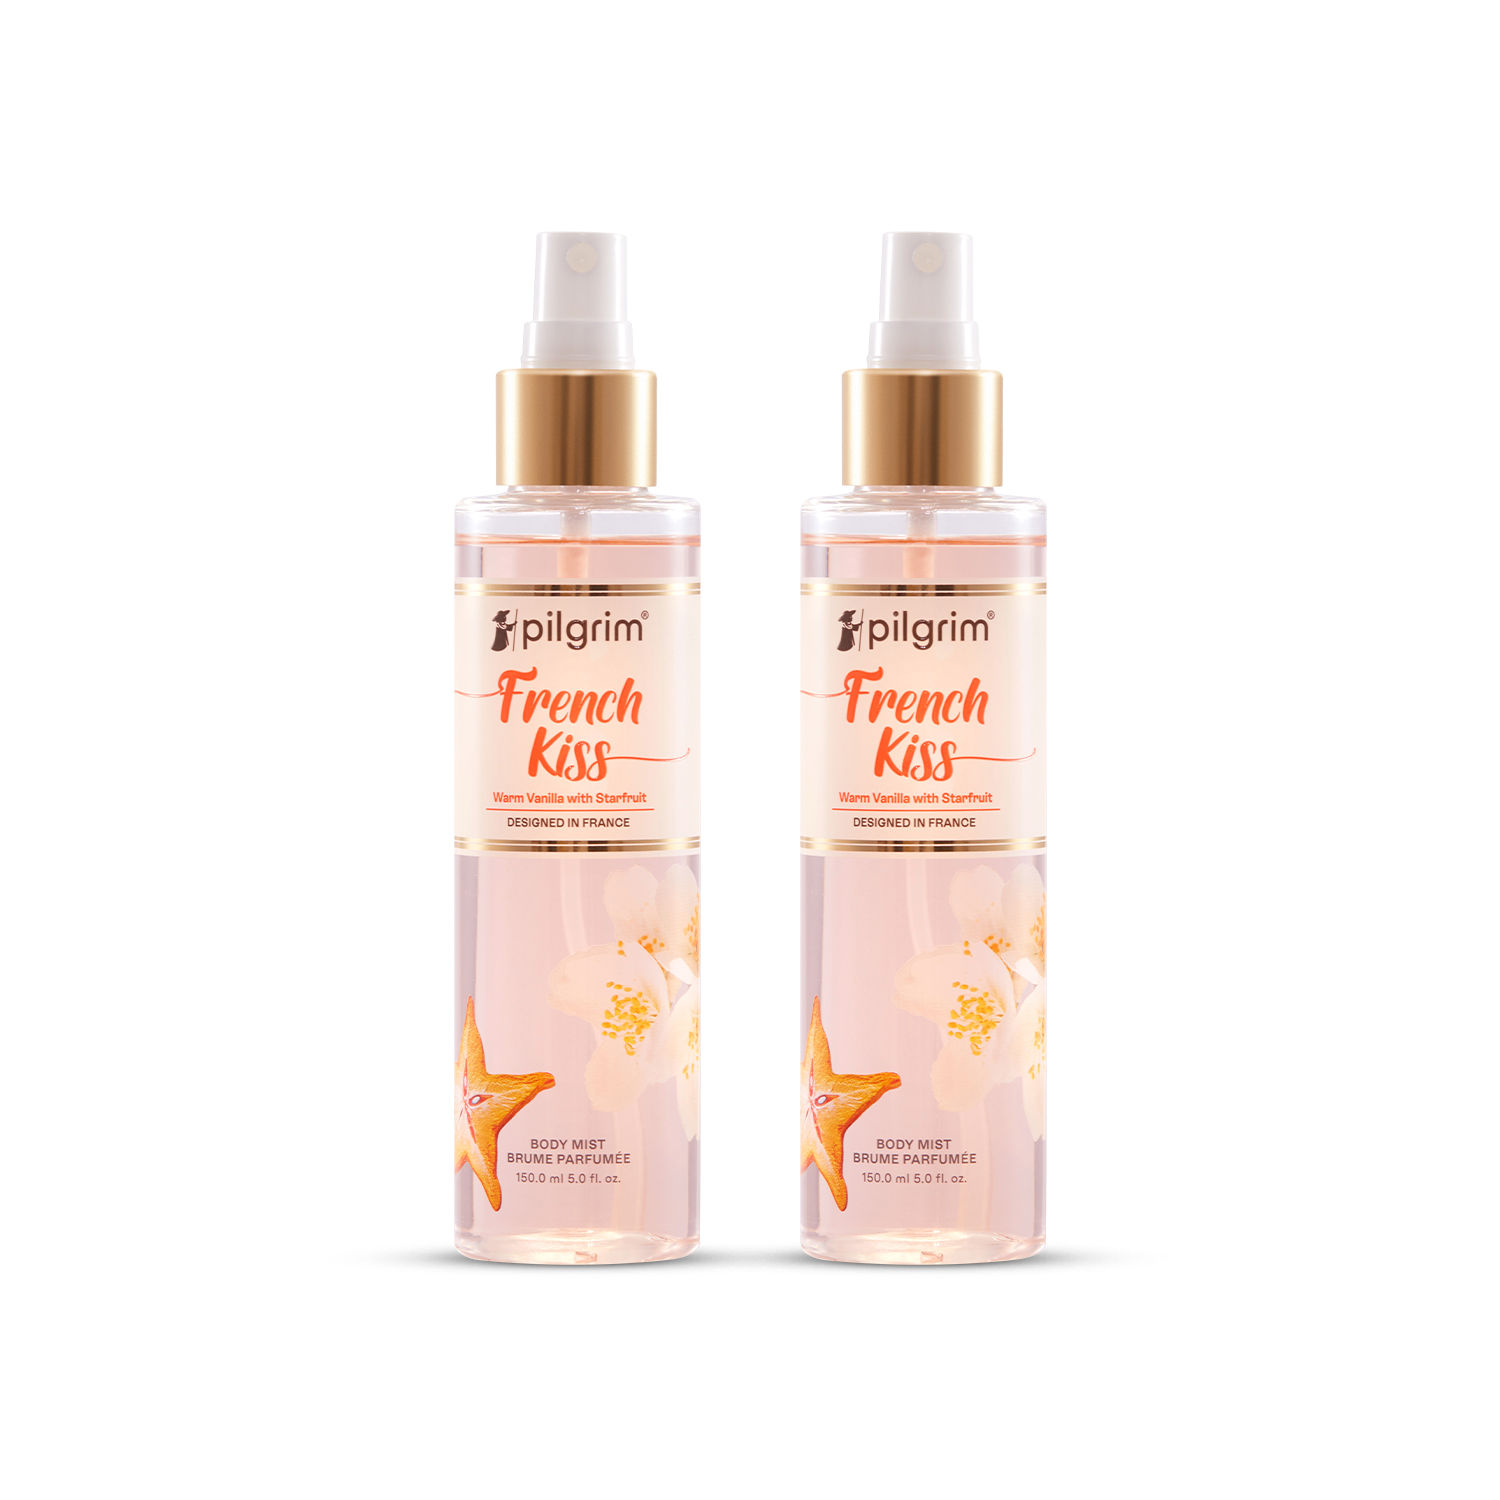 Buy Pilgrim French Kiss Body Mist (Vanilla with starfruit)| Vanilla Body Mist for Women Long Lasting| Sensual Fragrance | Body spray| Perfume for Women, Pack of 2 - Purplle